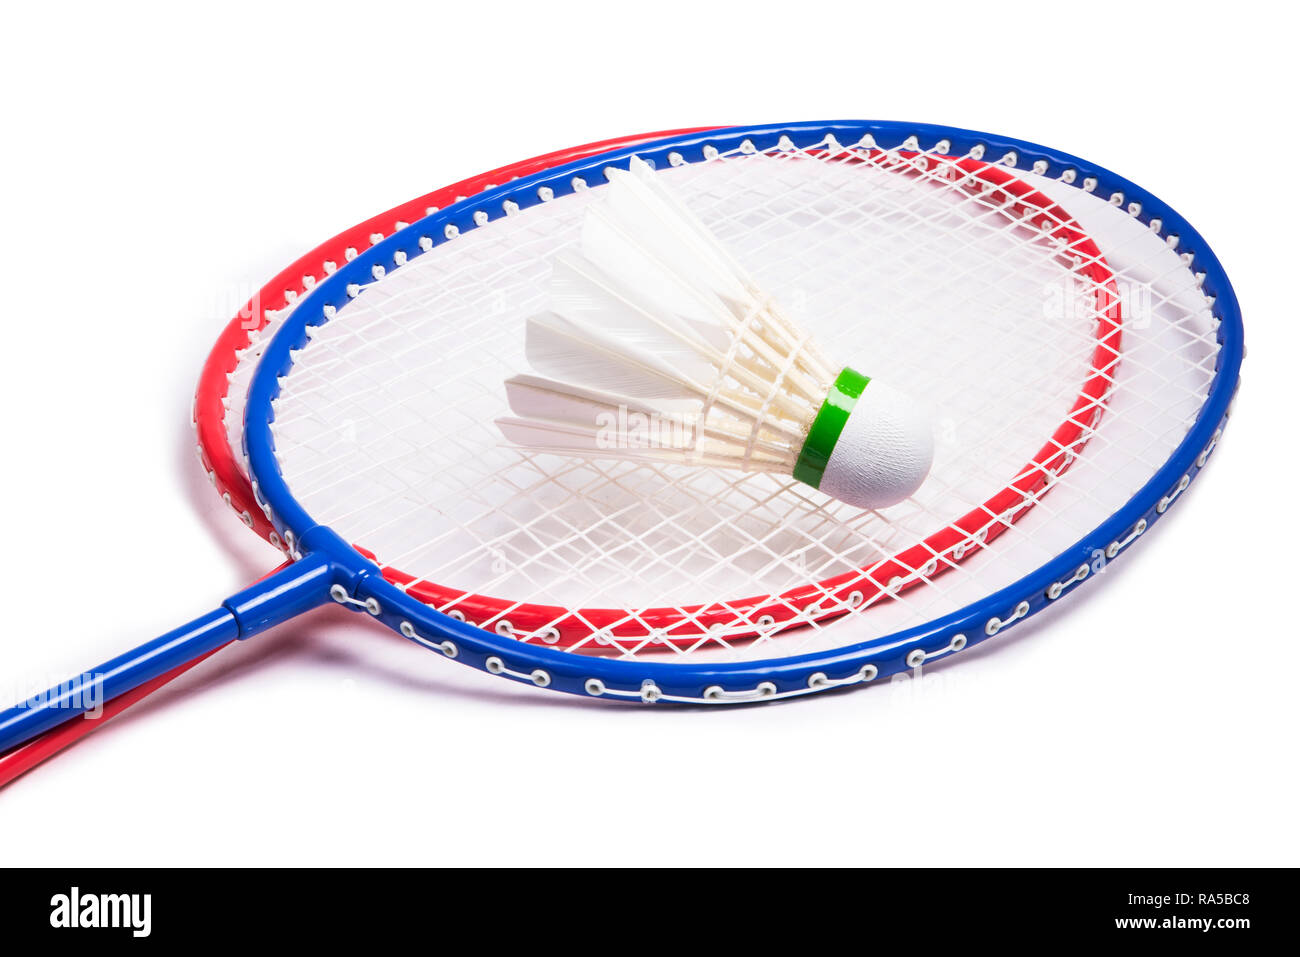 Badminton racchetta e volano Foto Stock